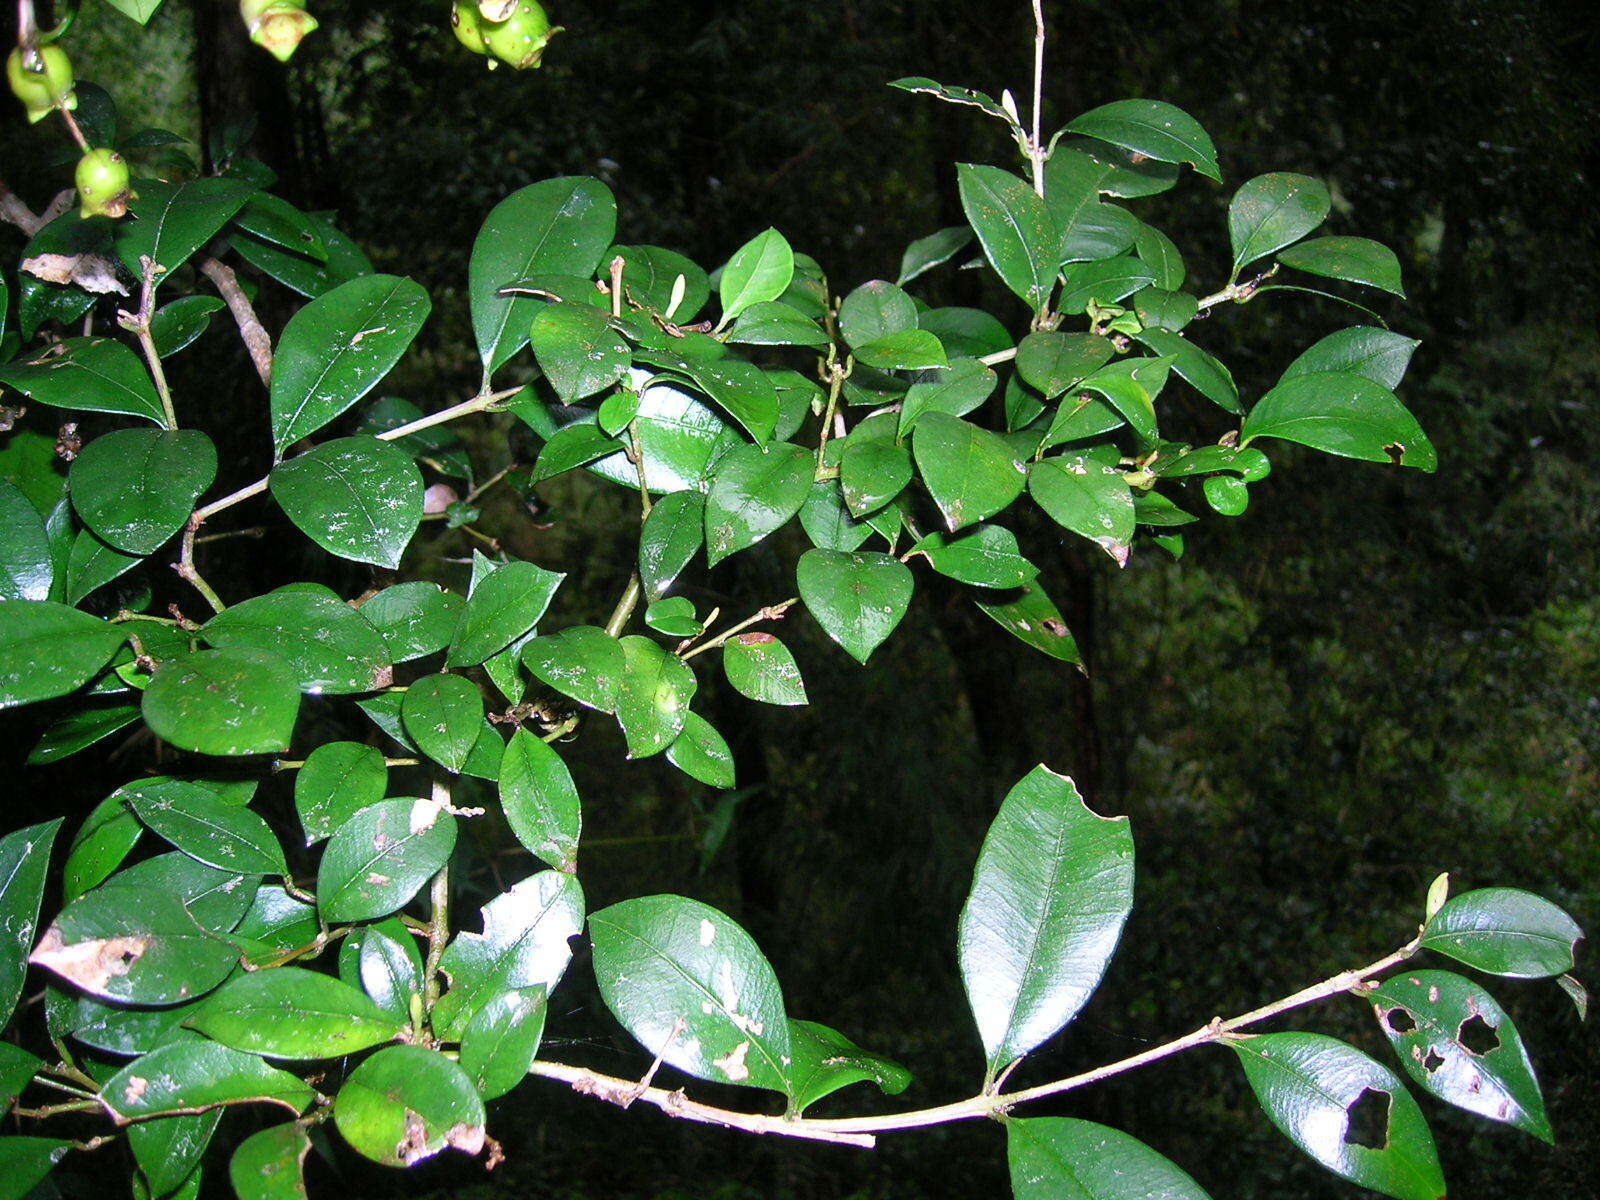 Image of Myrceugenia planipes (Hooker & Arn.) Berg